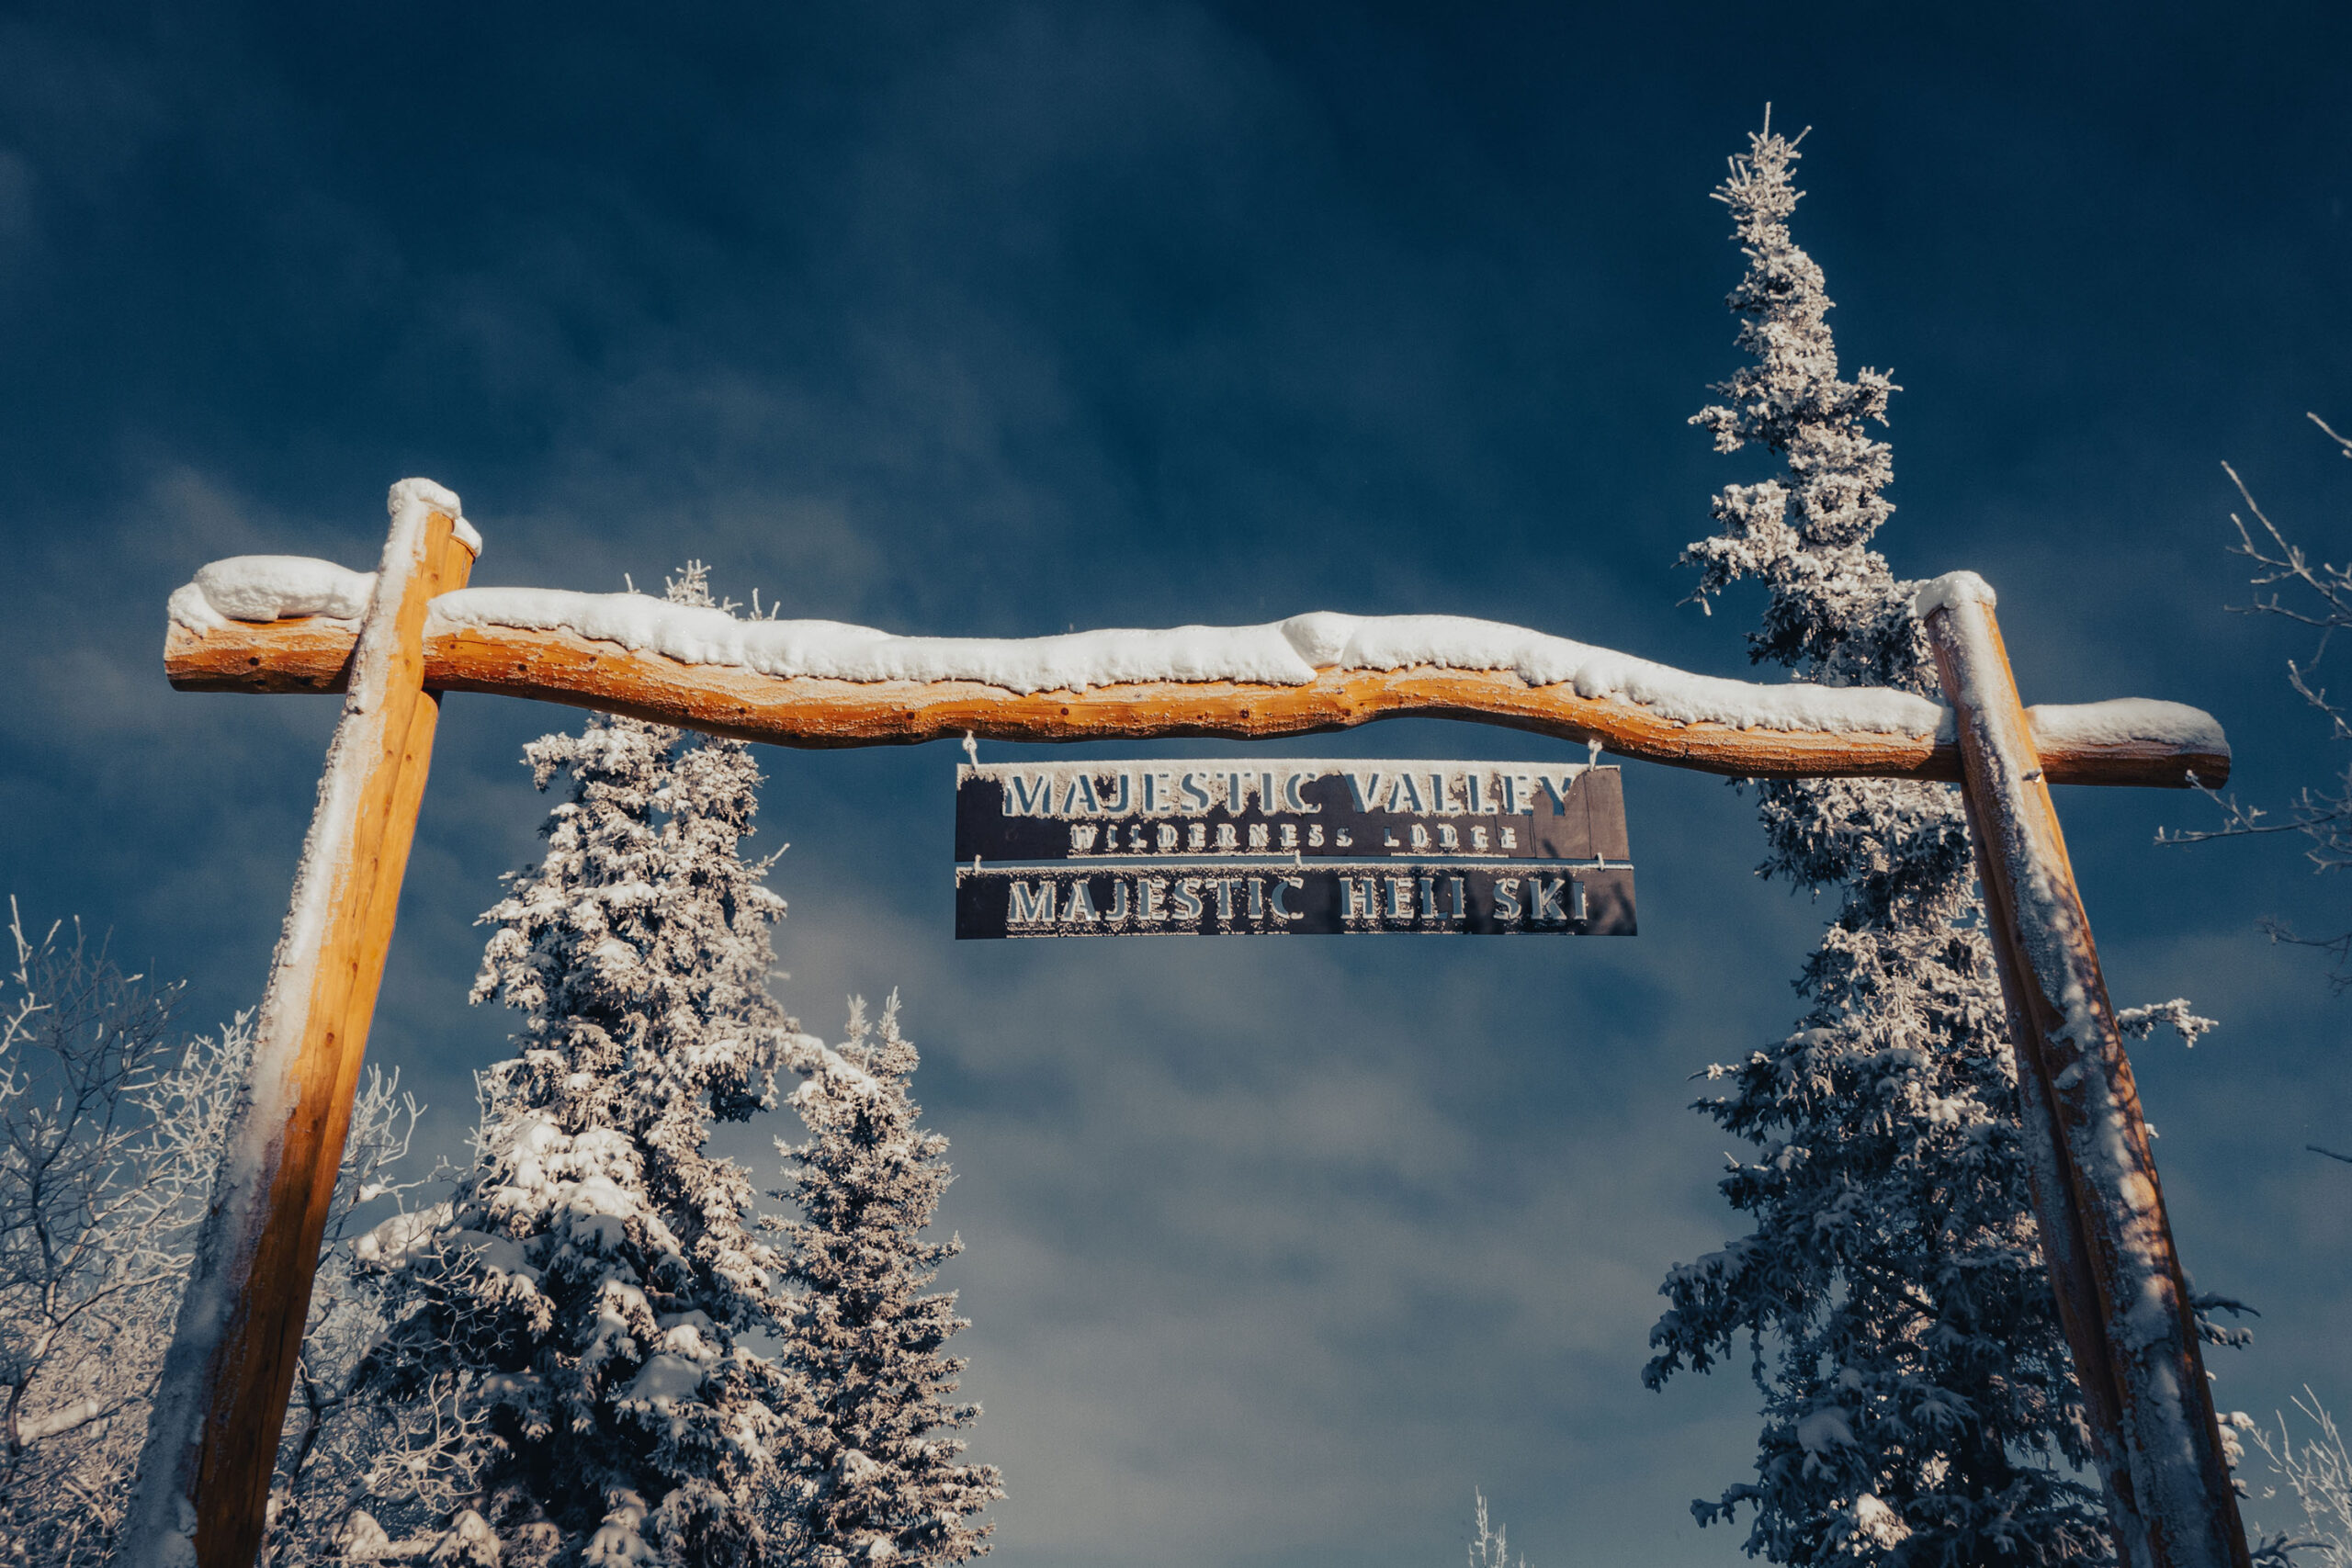 Majestic Heli Ski highway road sign